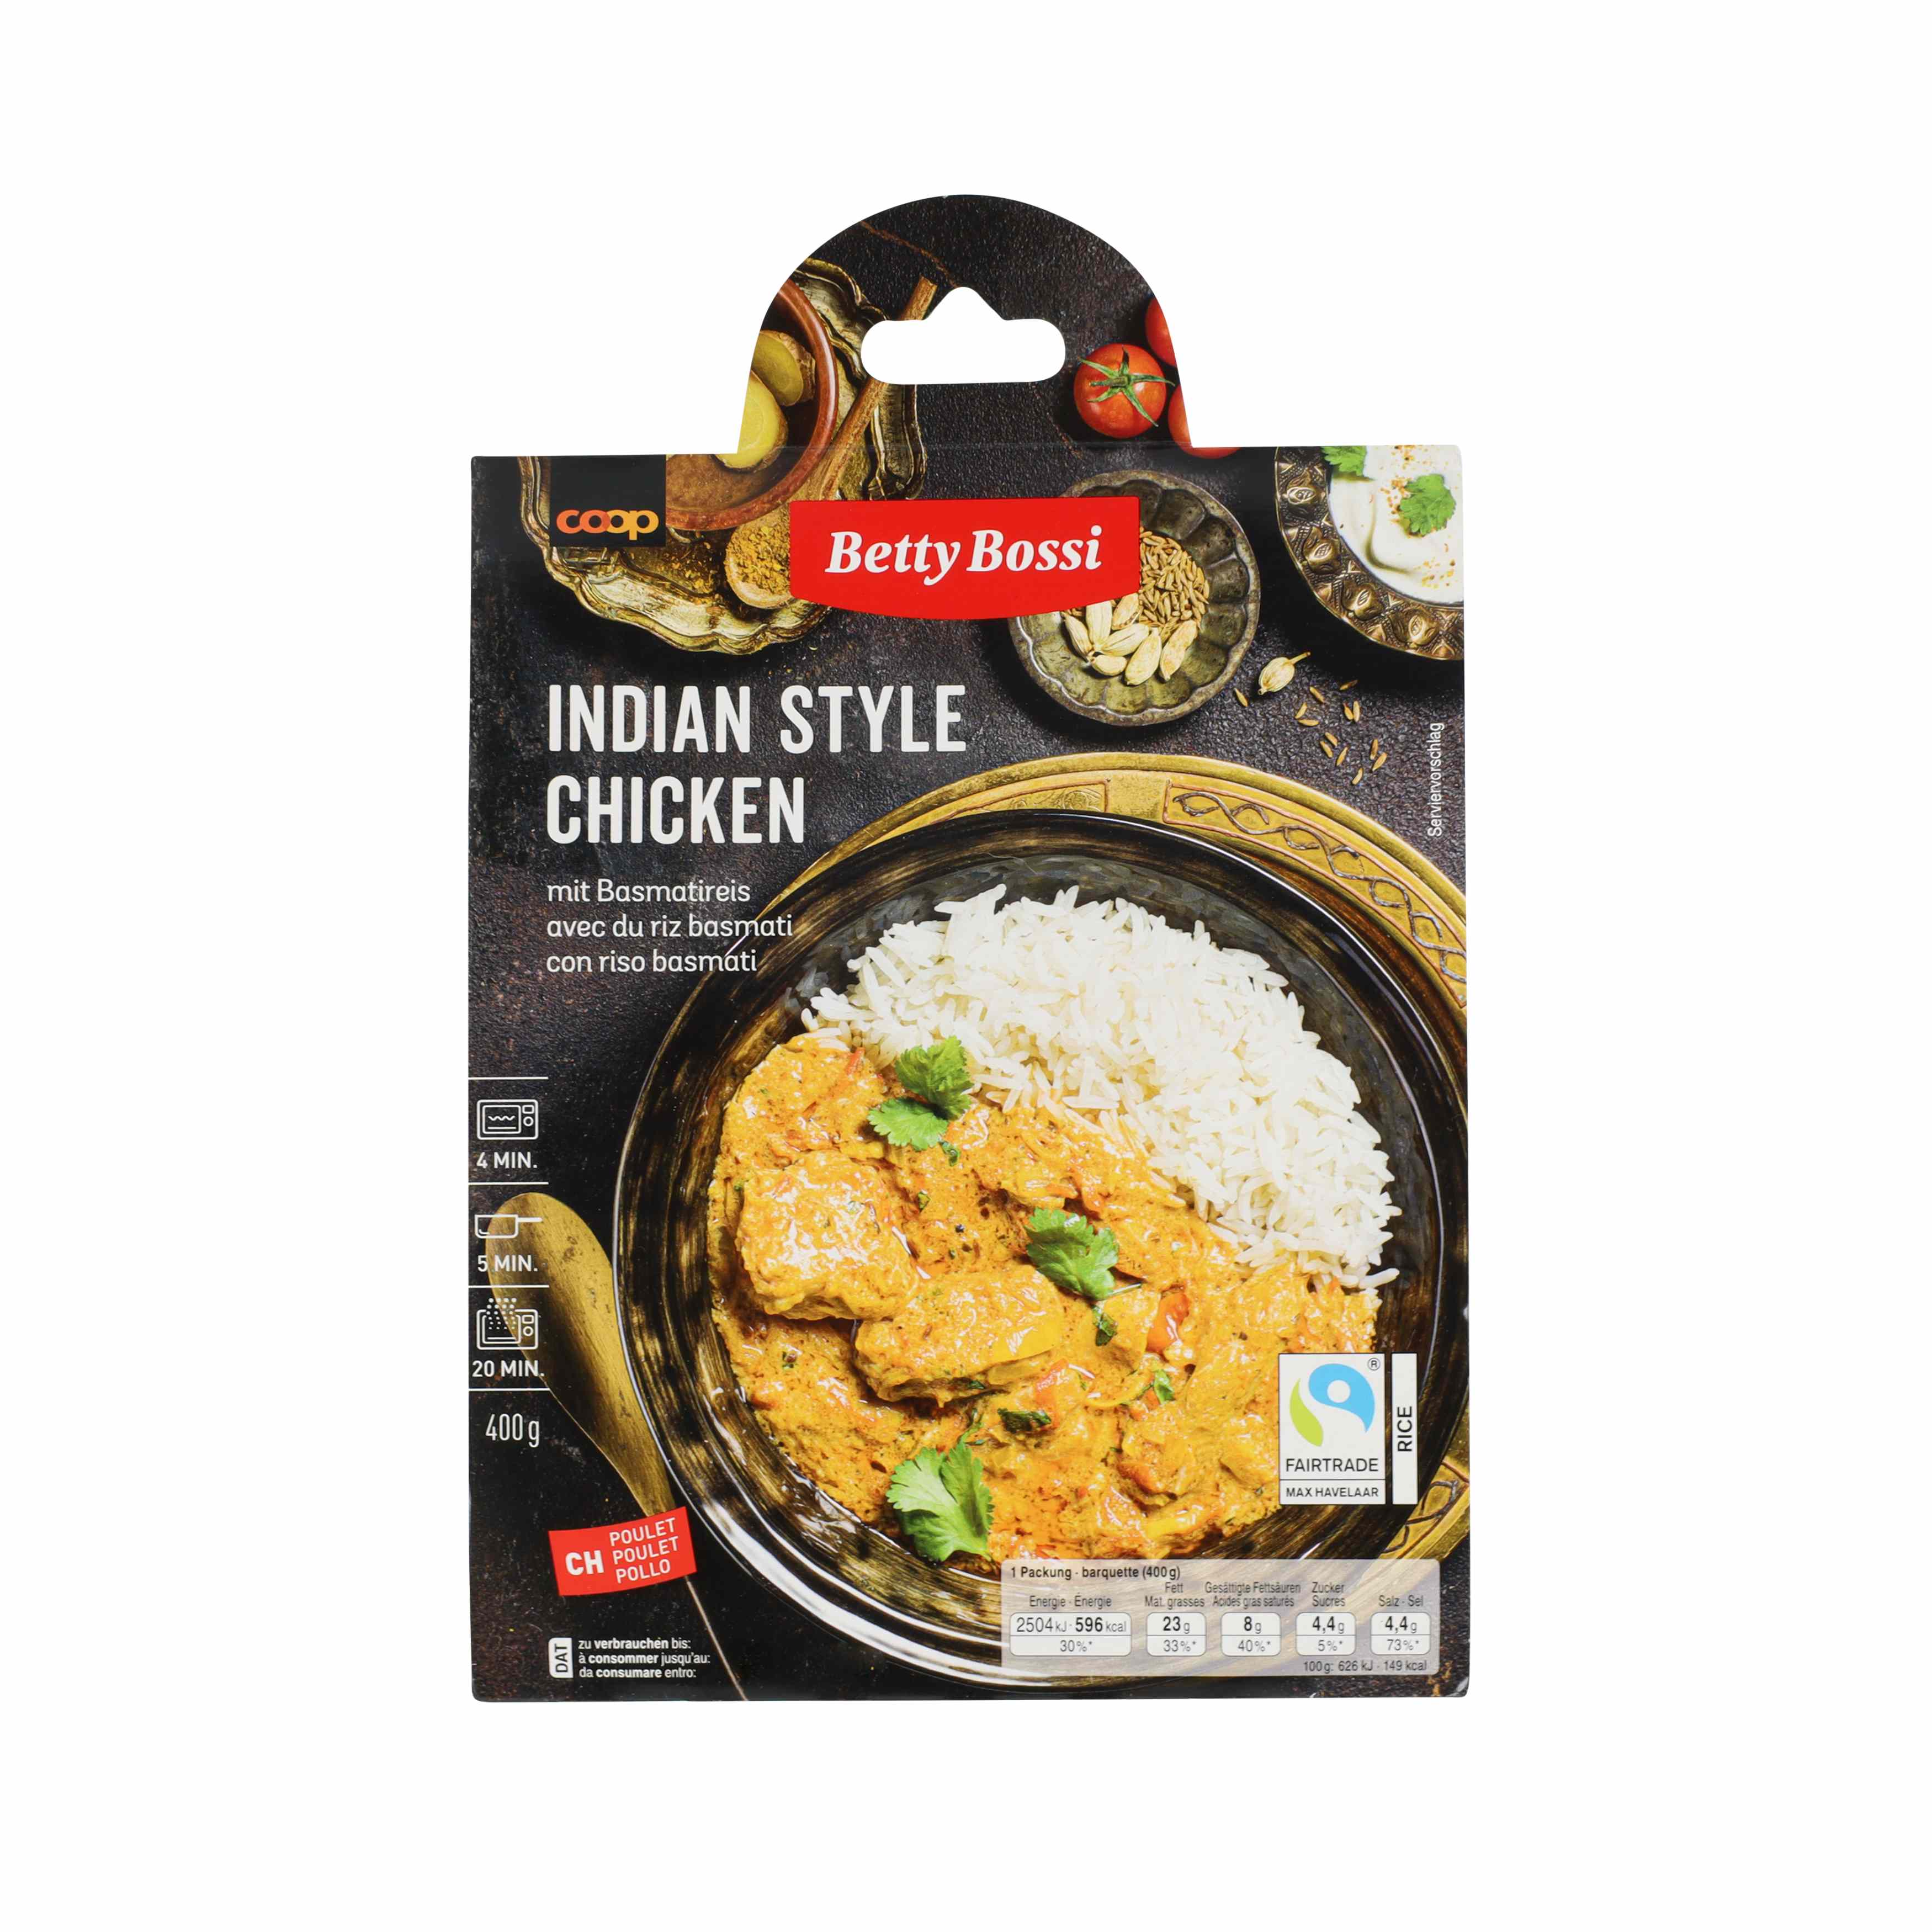 Indian Style Chicken